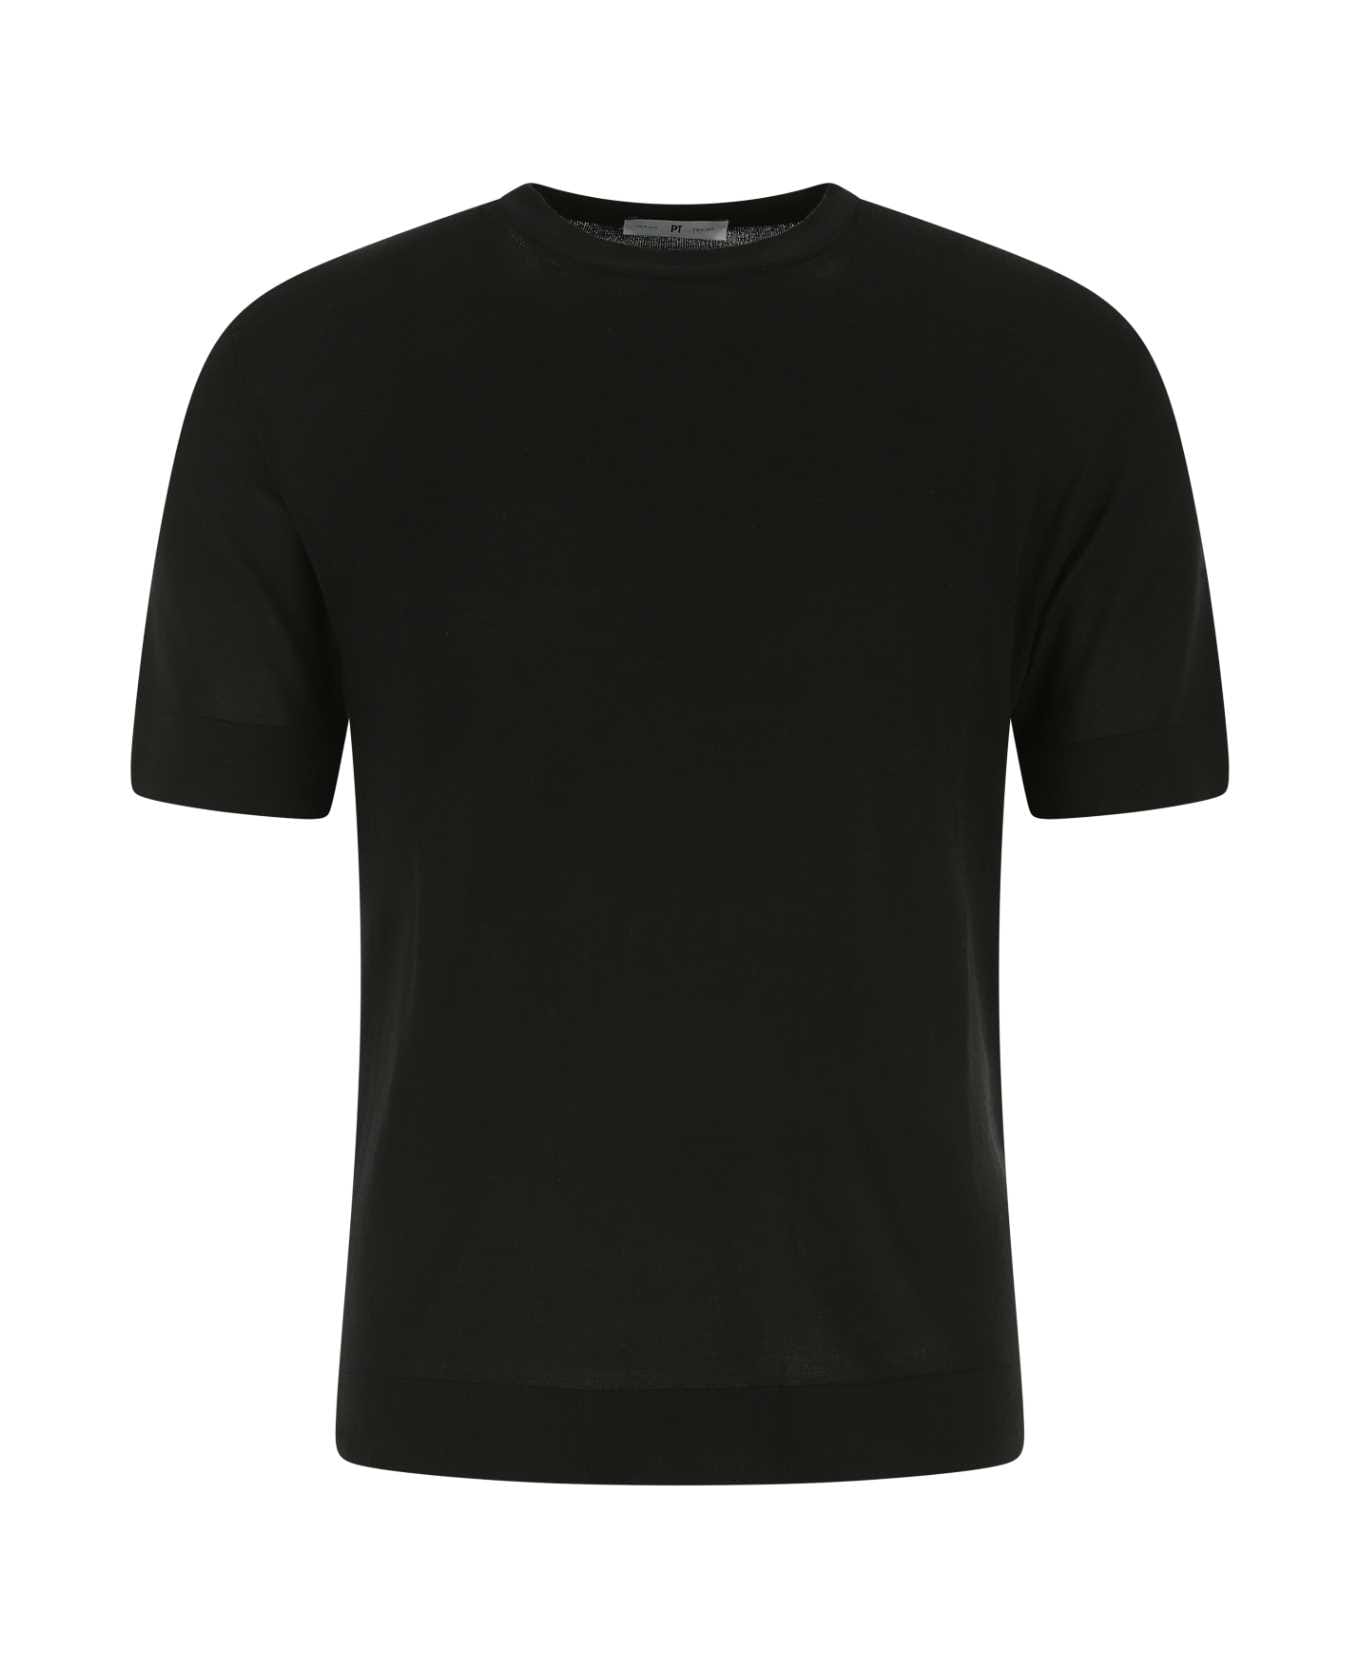 PT Torino Black Cotton Blend T-shirt - 0990